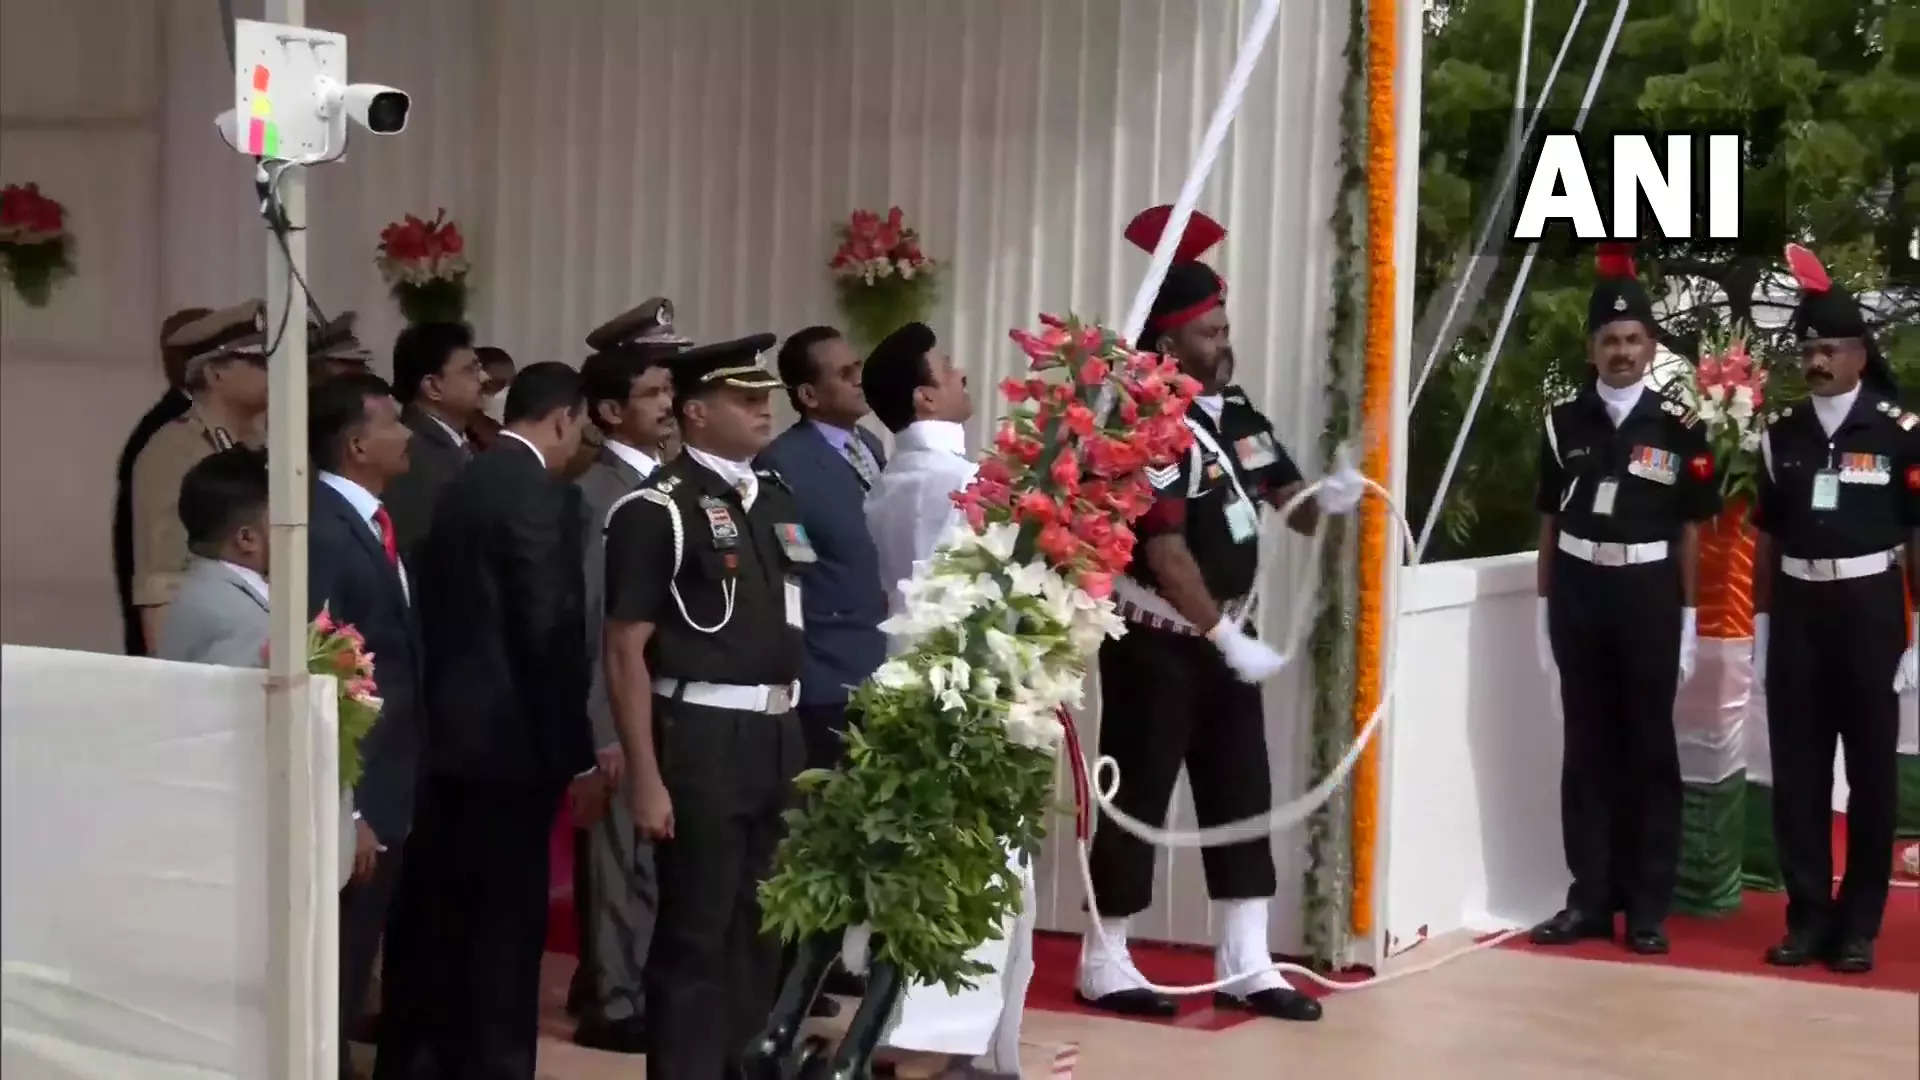 Tamil Nadu CM MK Stalin hoisted the national flag at Fort St George in Chennai